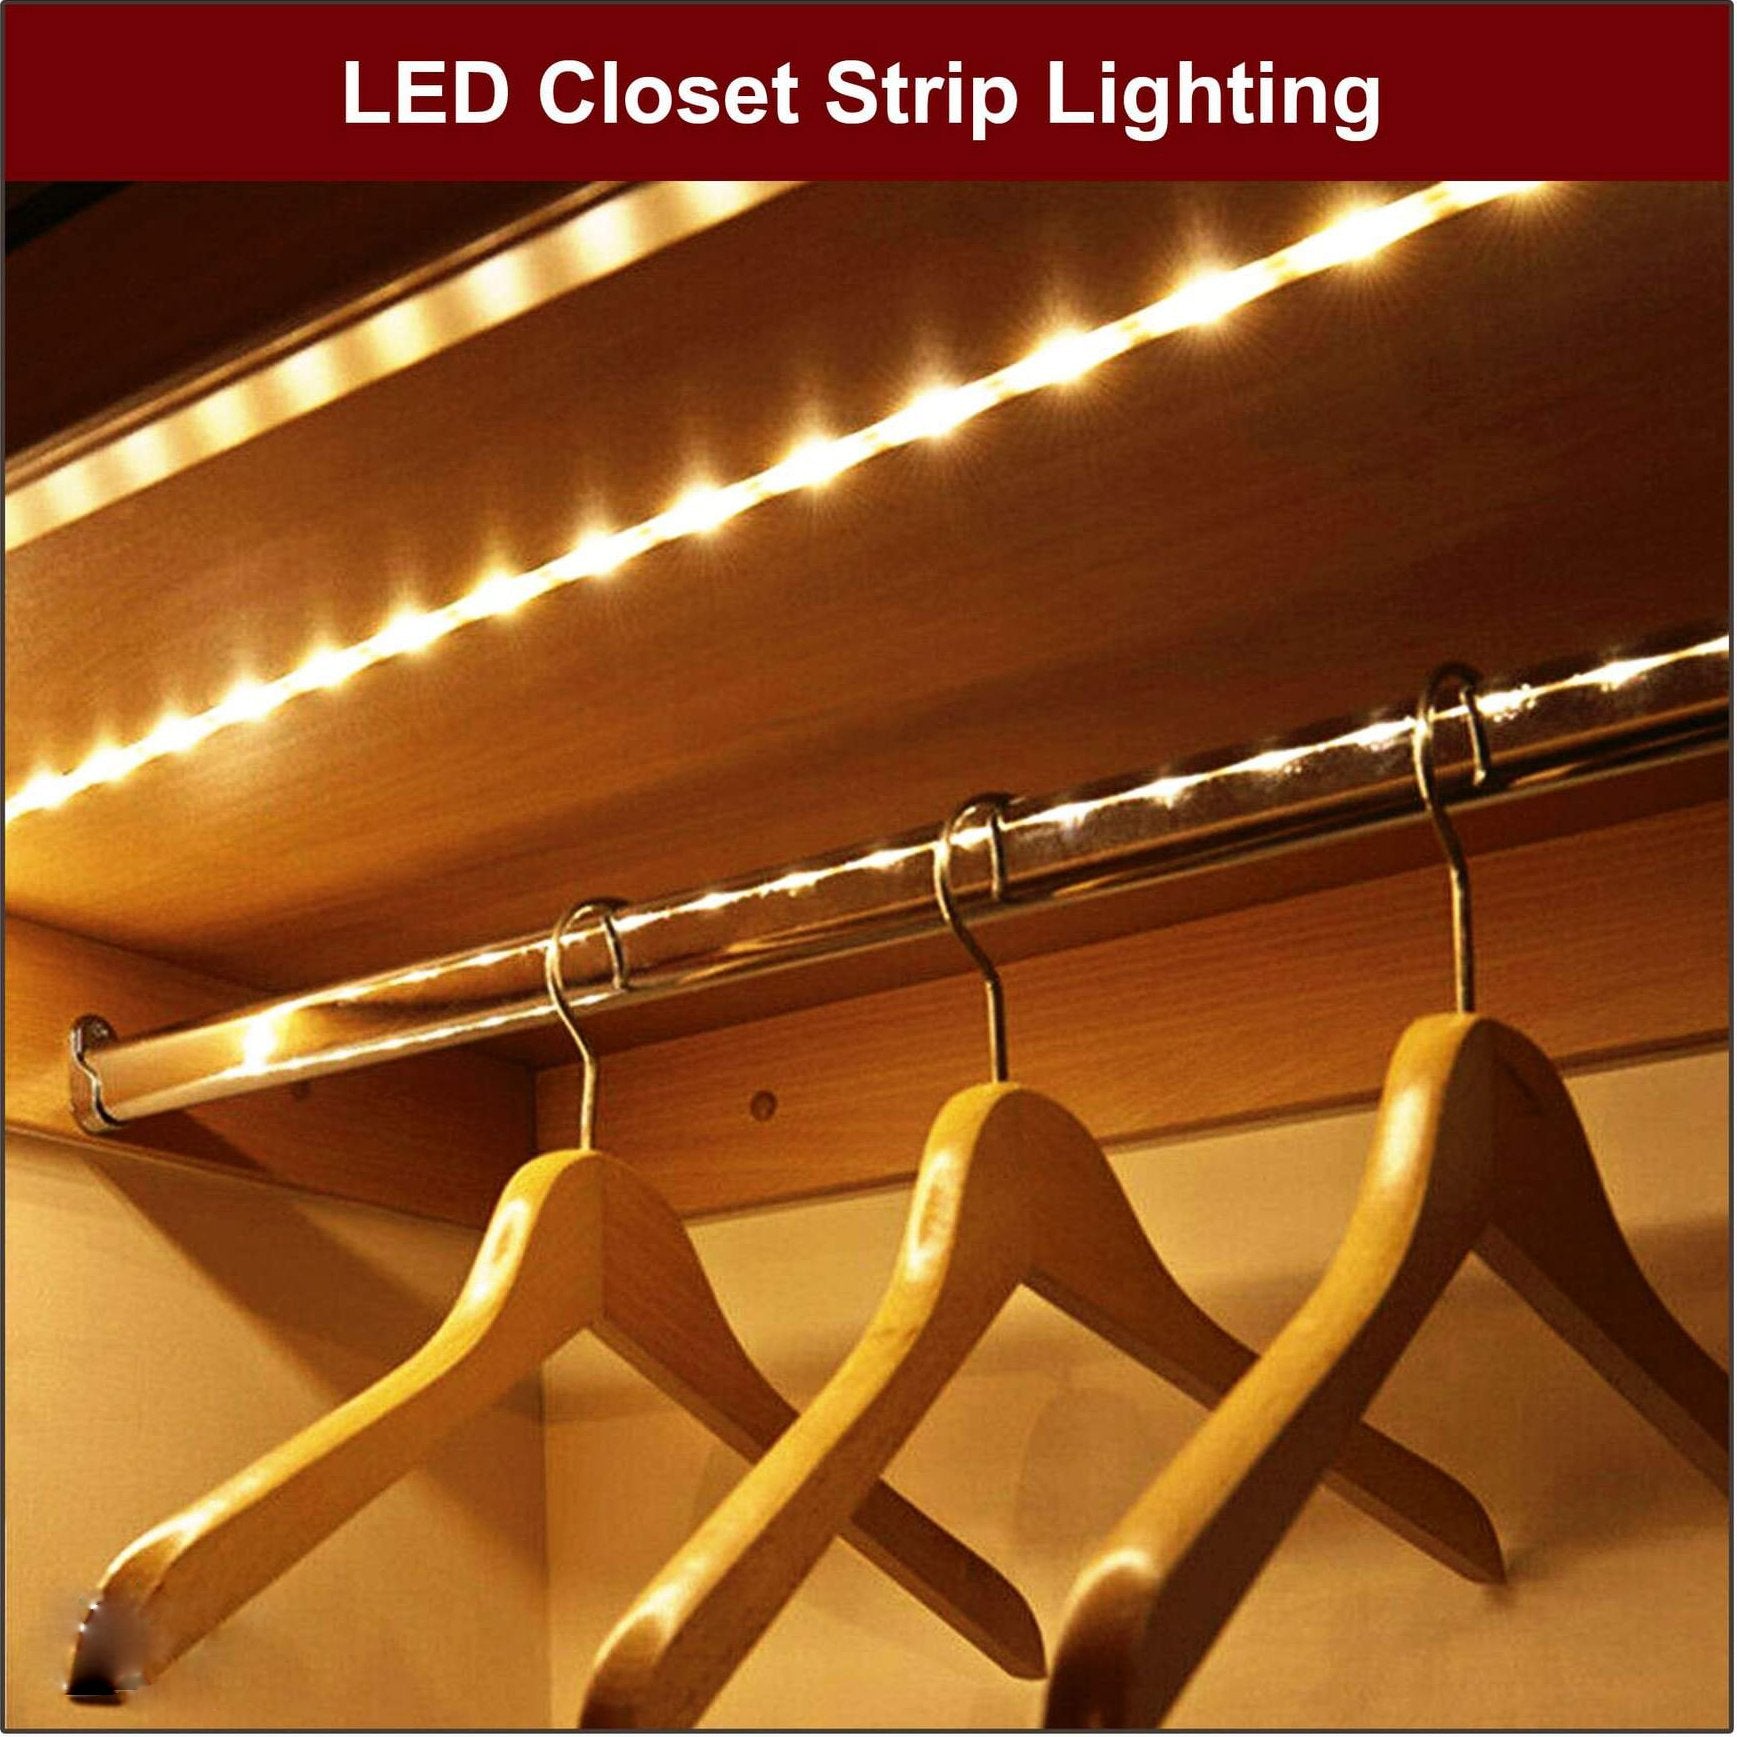 😍 LAST DAY PROMOTION-70%OFF 😍— LED Closet Strip Lighting